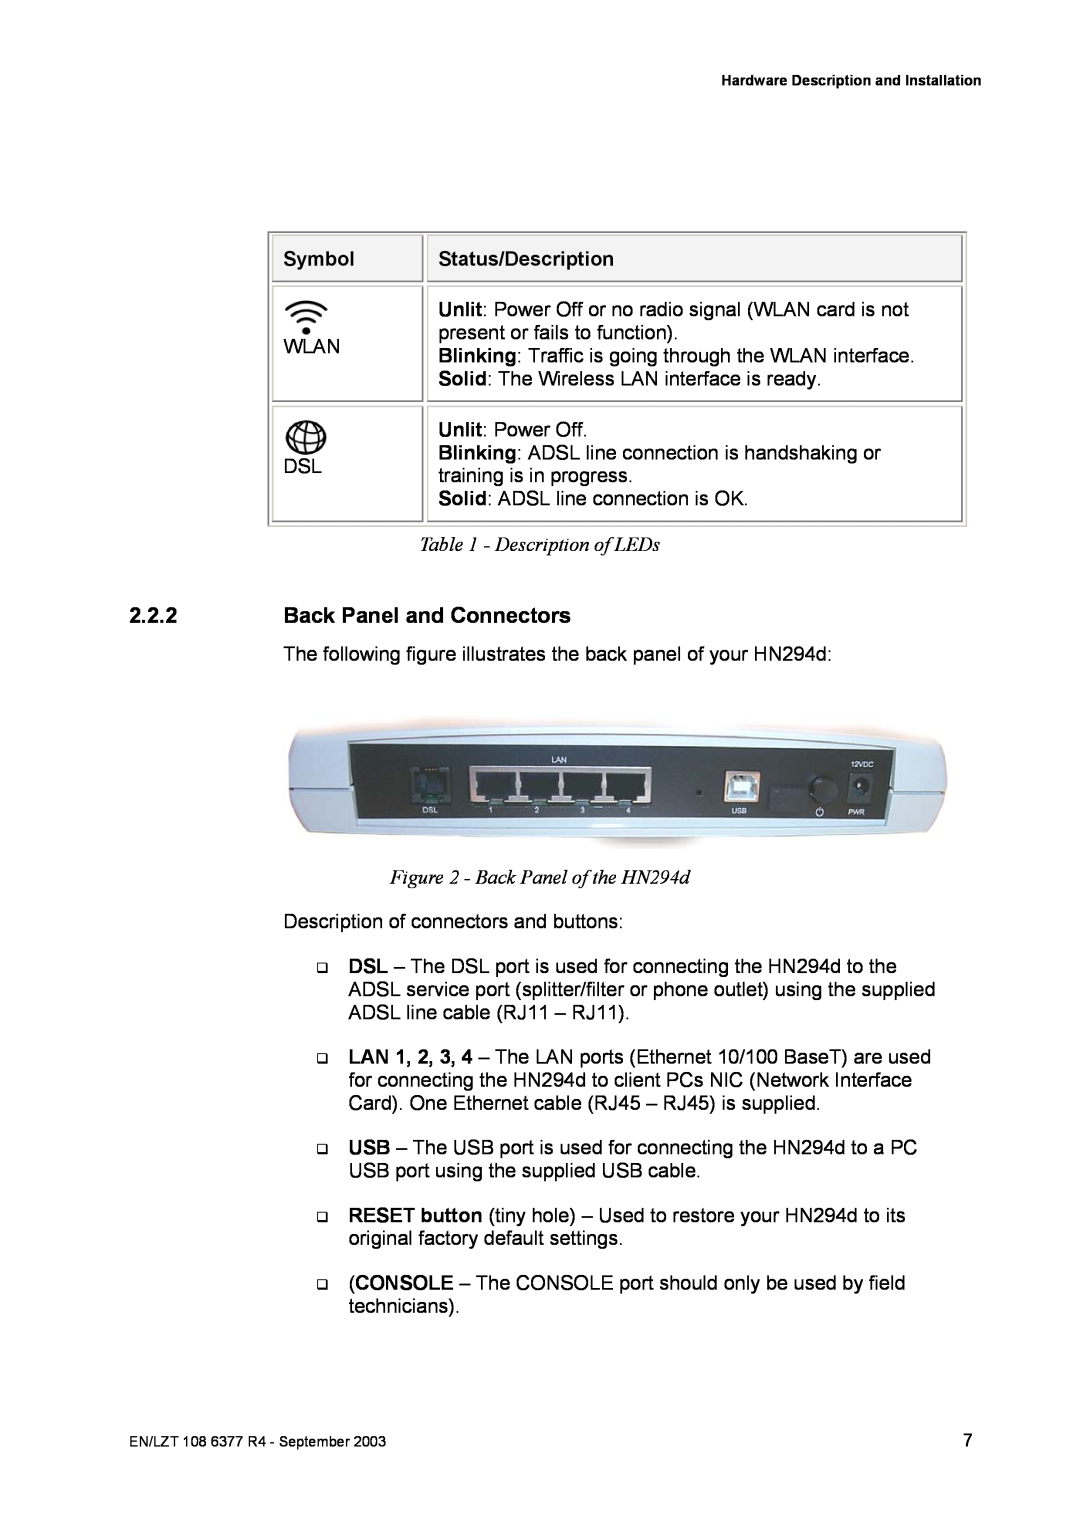 Garmin HN294DP/DI Back Panel and Connectors, Symbol, Status/Description, Description of LEDs, Back Panel of the HN294d 